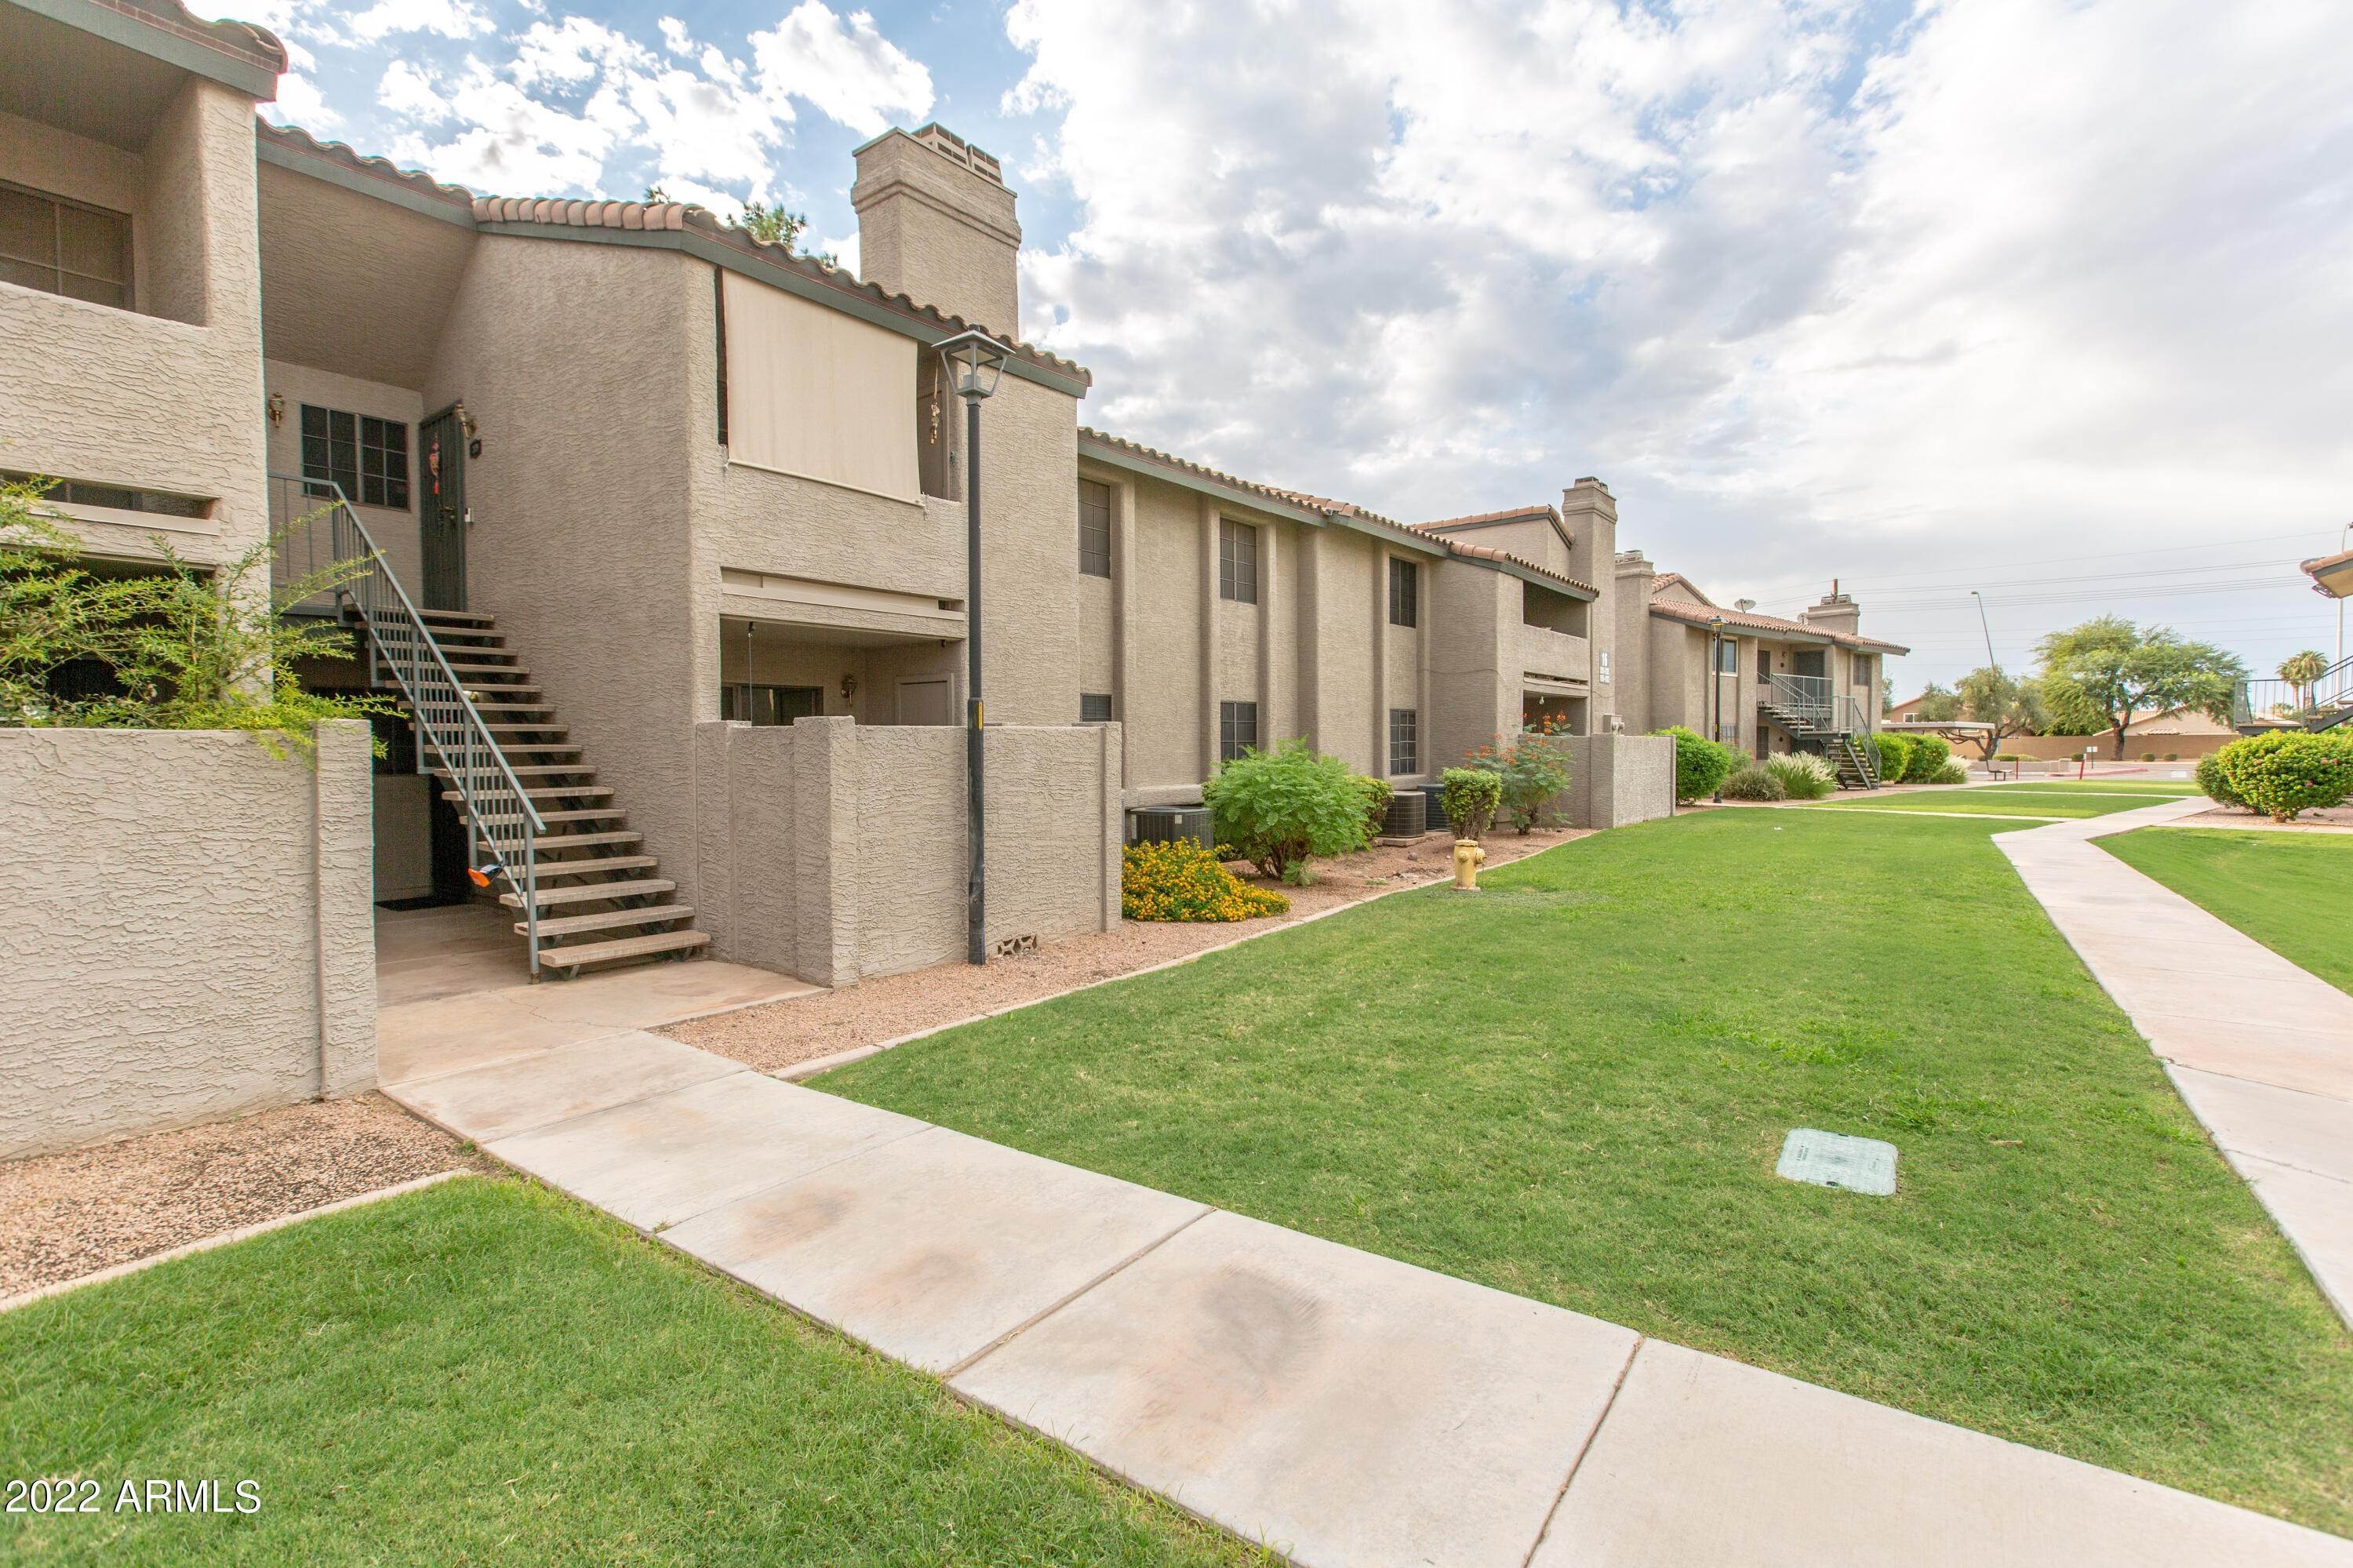 2. Apartment for Sale at Mesa, AZ 85210